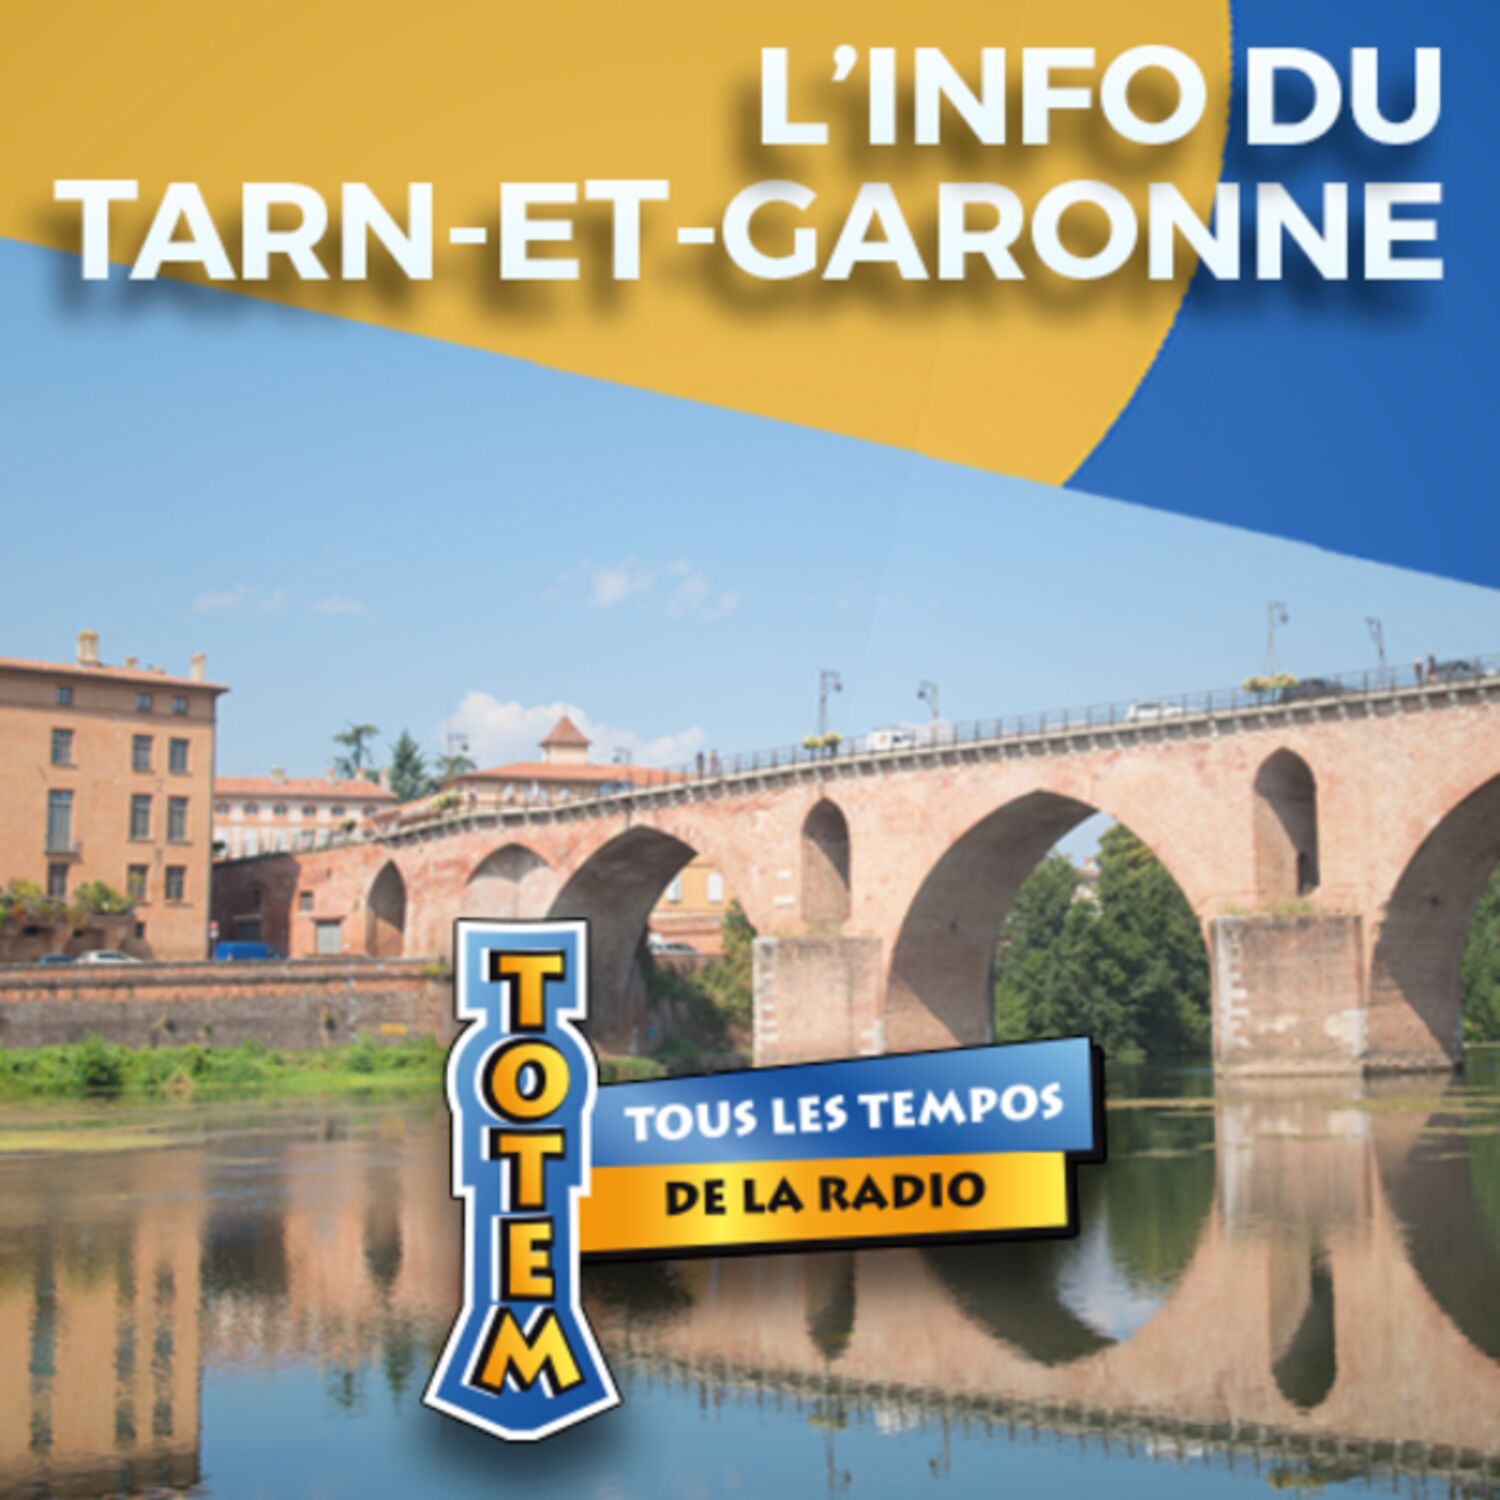 L'info du Tarn-et-Garonne du 17/04/23 à 12h28